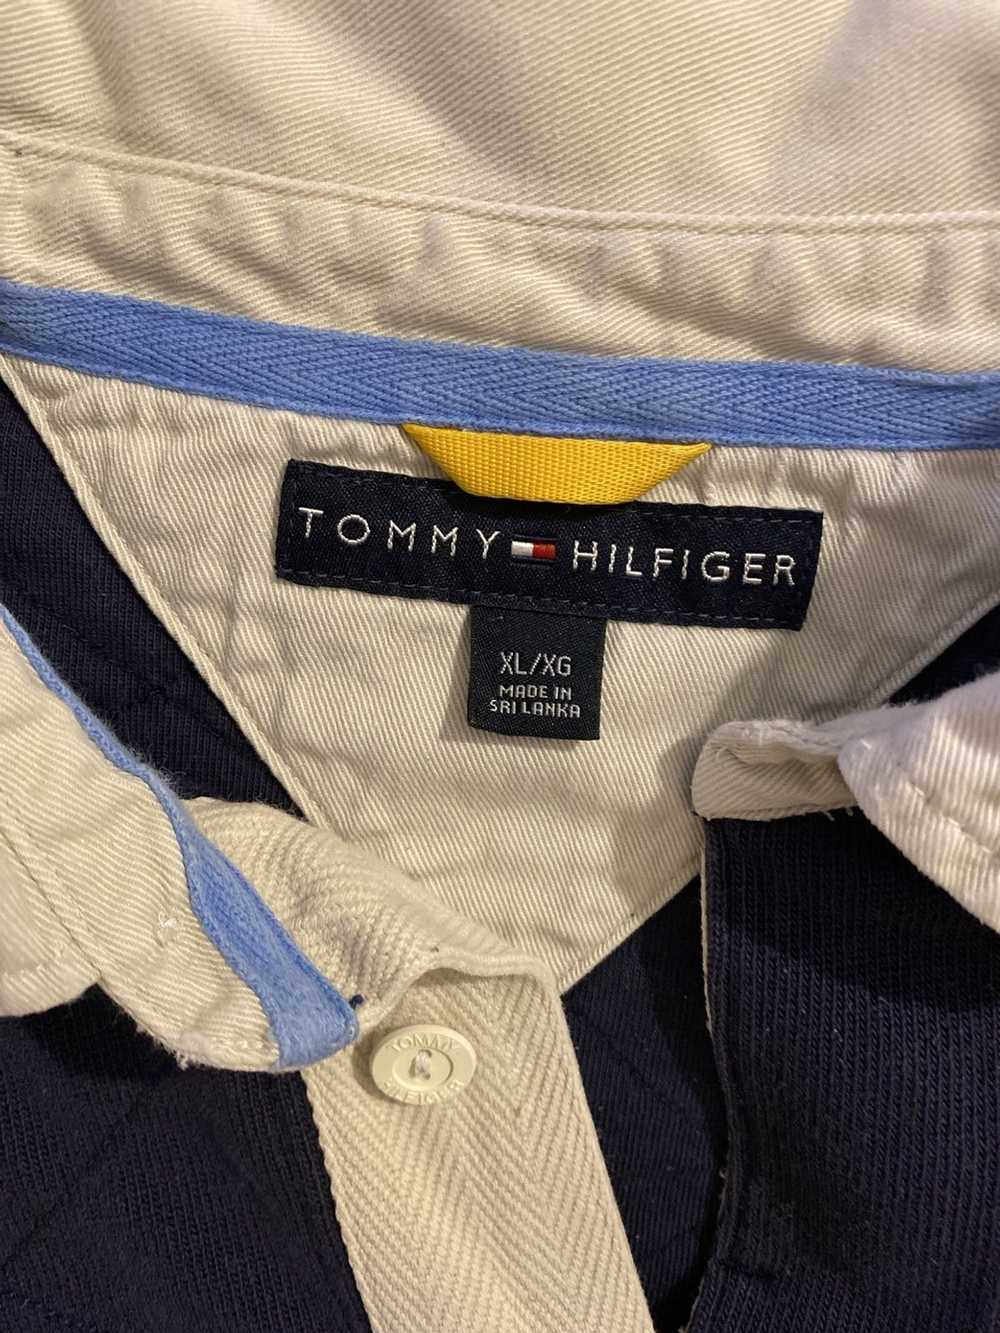 Tommy Hilfiger 90s vintage Tommy Hilfiger knit po… - image 4